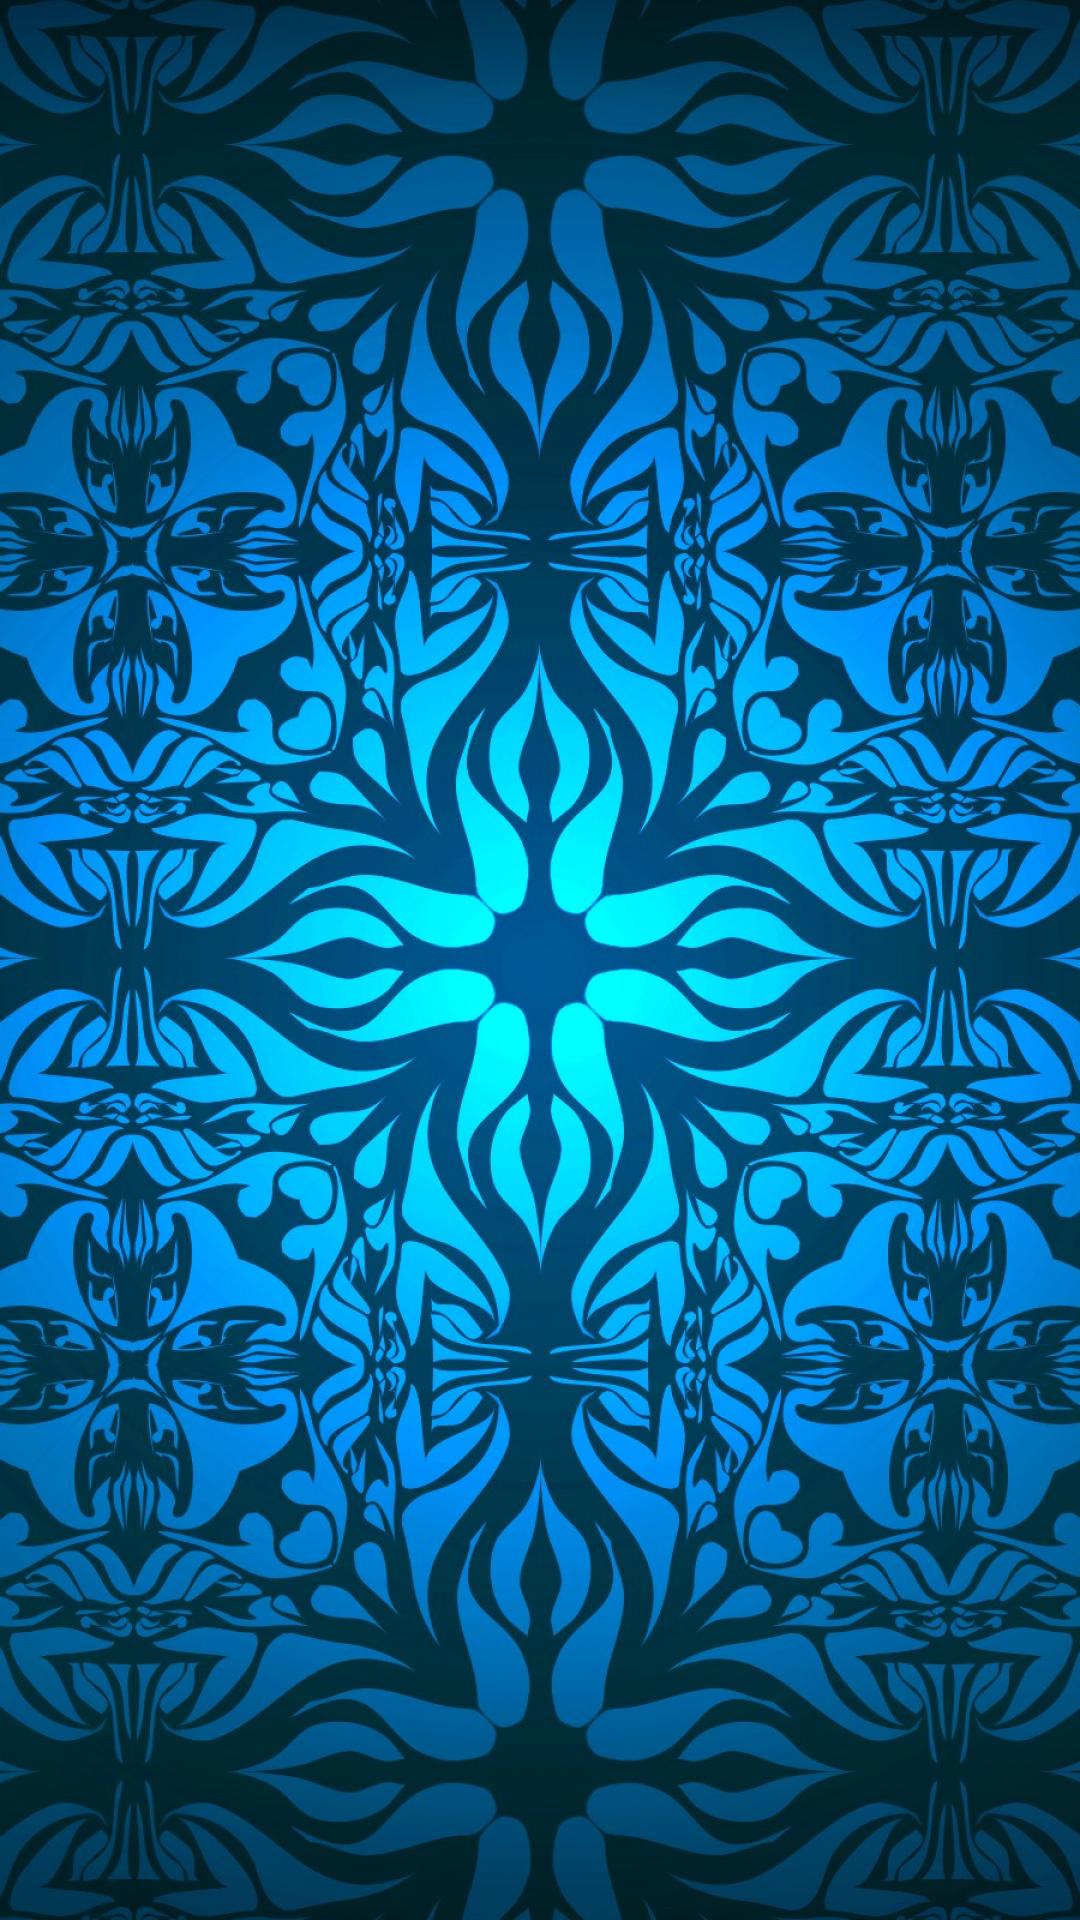 Light blue shapes turkey artwork antique ceramic background